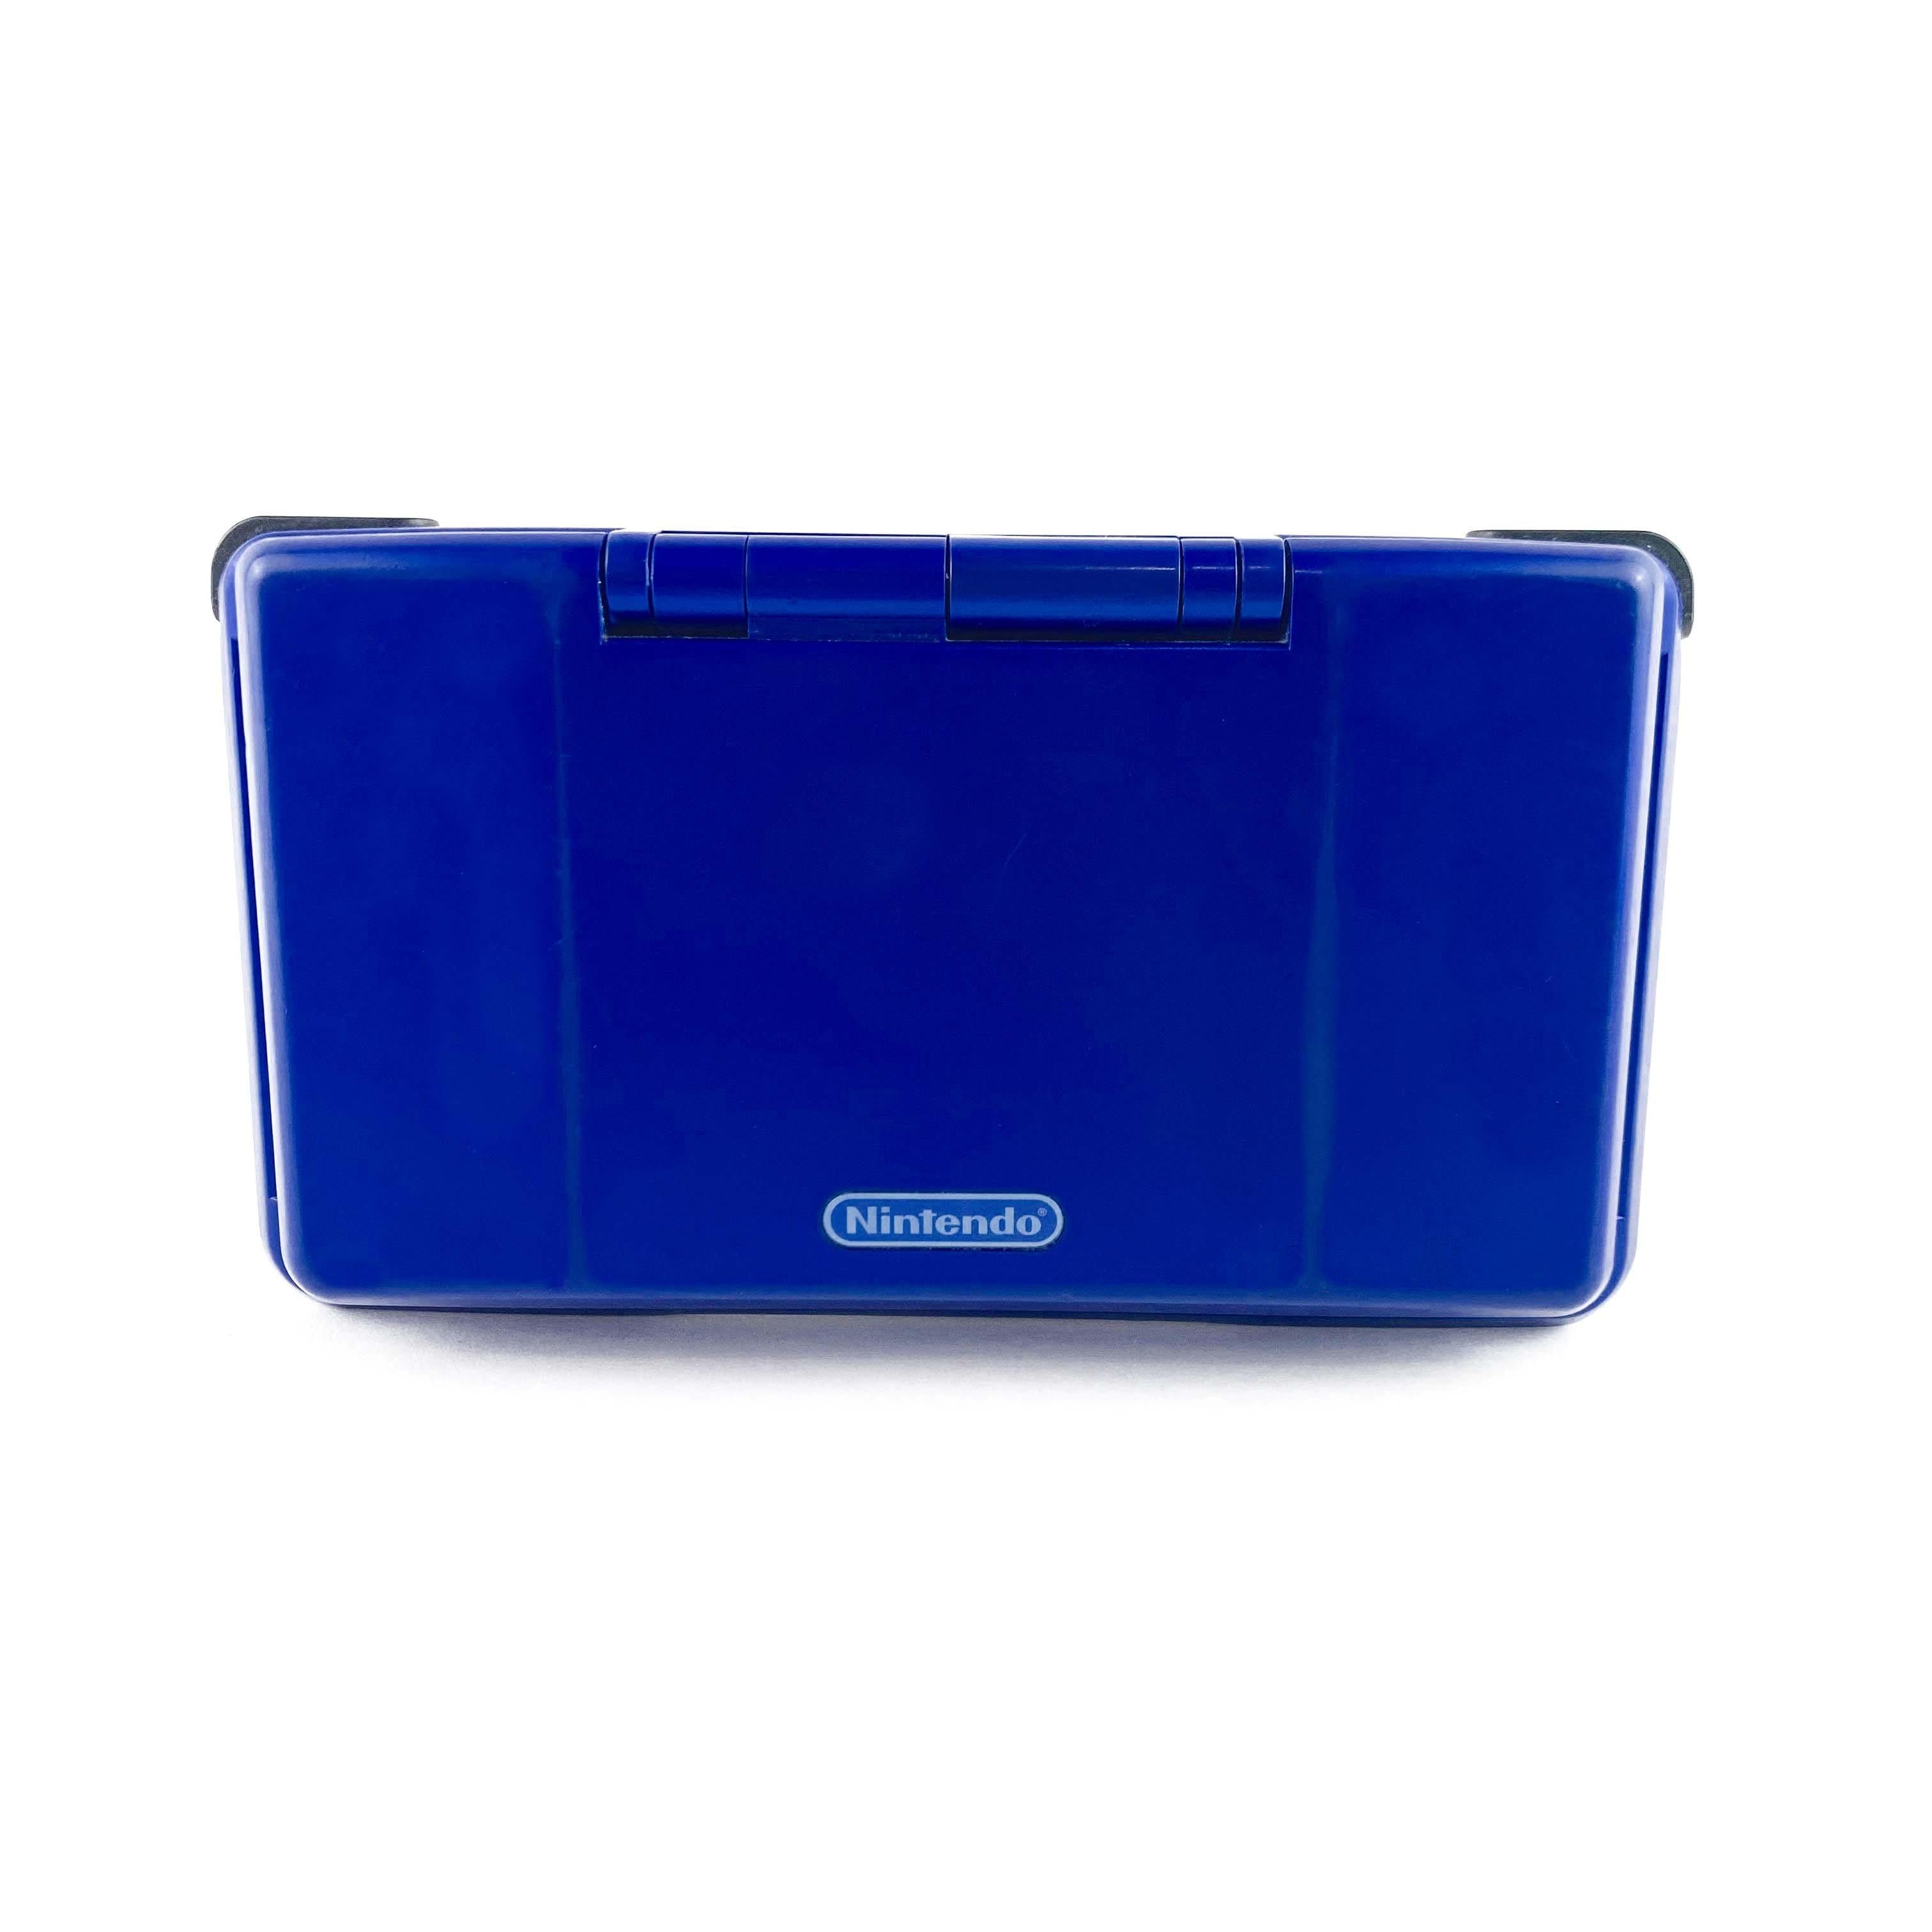 Original Nintendo DS Electric Blue Handheld Console (NRT-001)